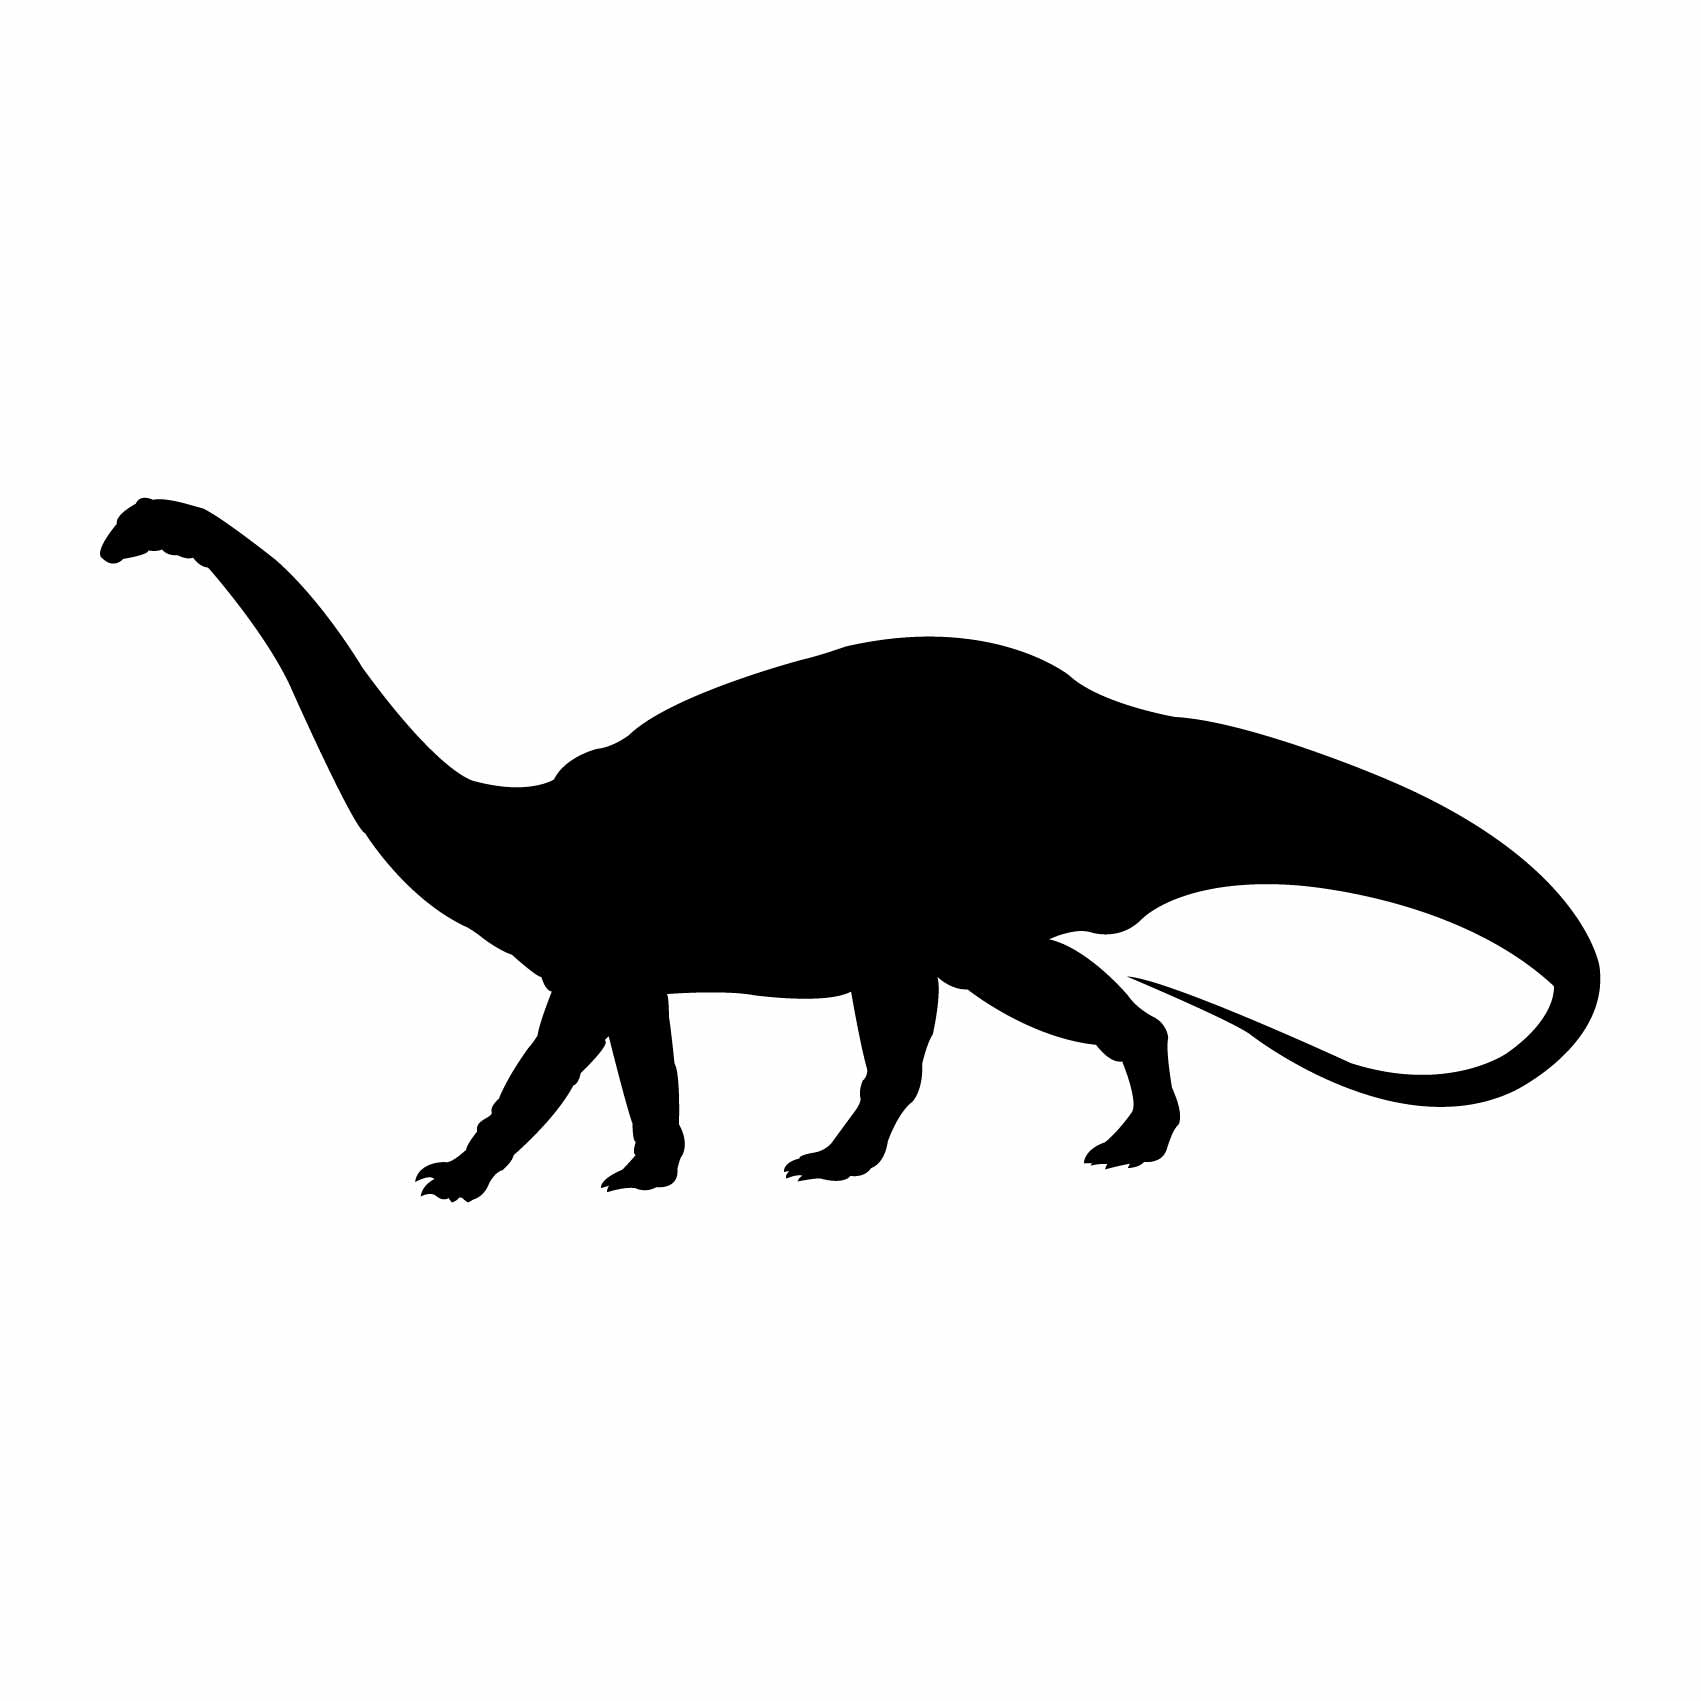 stickers-muraux-dinosaure-geant-ref12dinosaure-autocollant-muraux-chambre-enfant-diplodocus-sticker-mural-geant-dinosaures-deco-garçon-fille-(2)